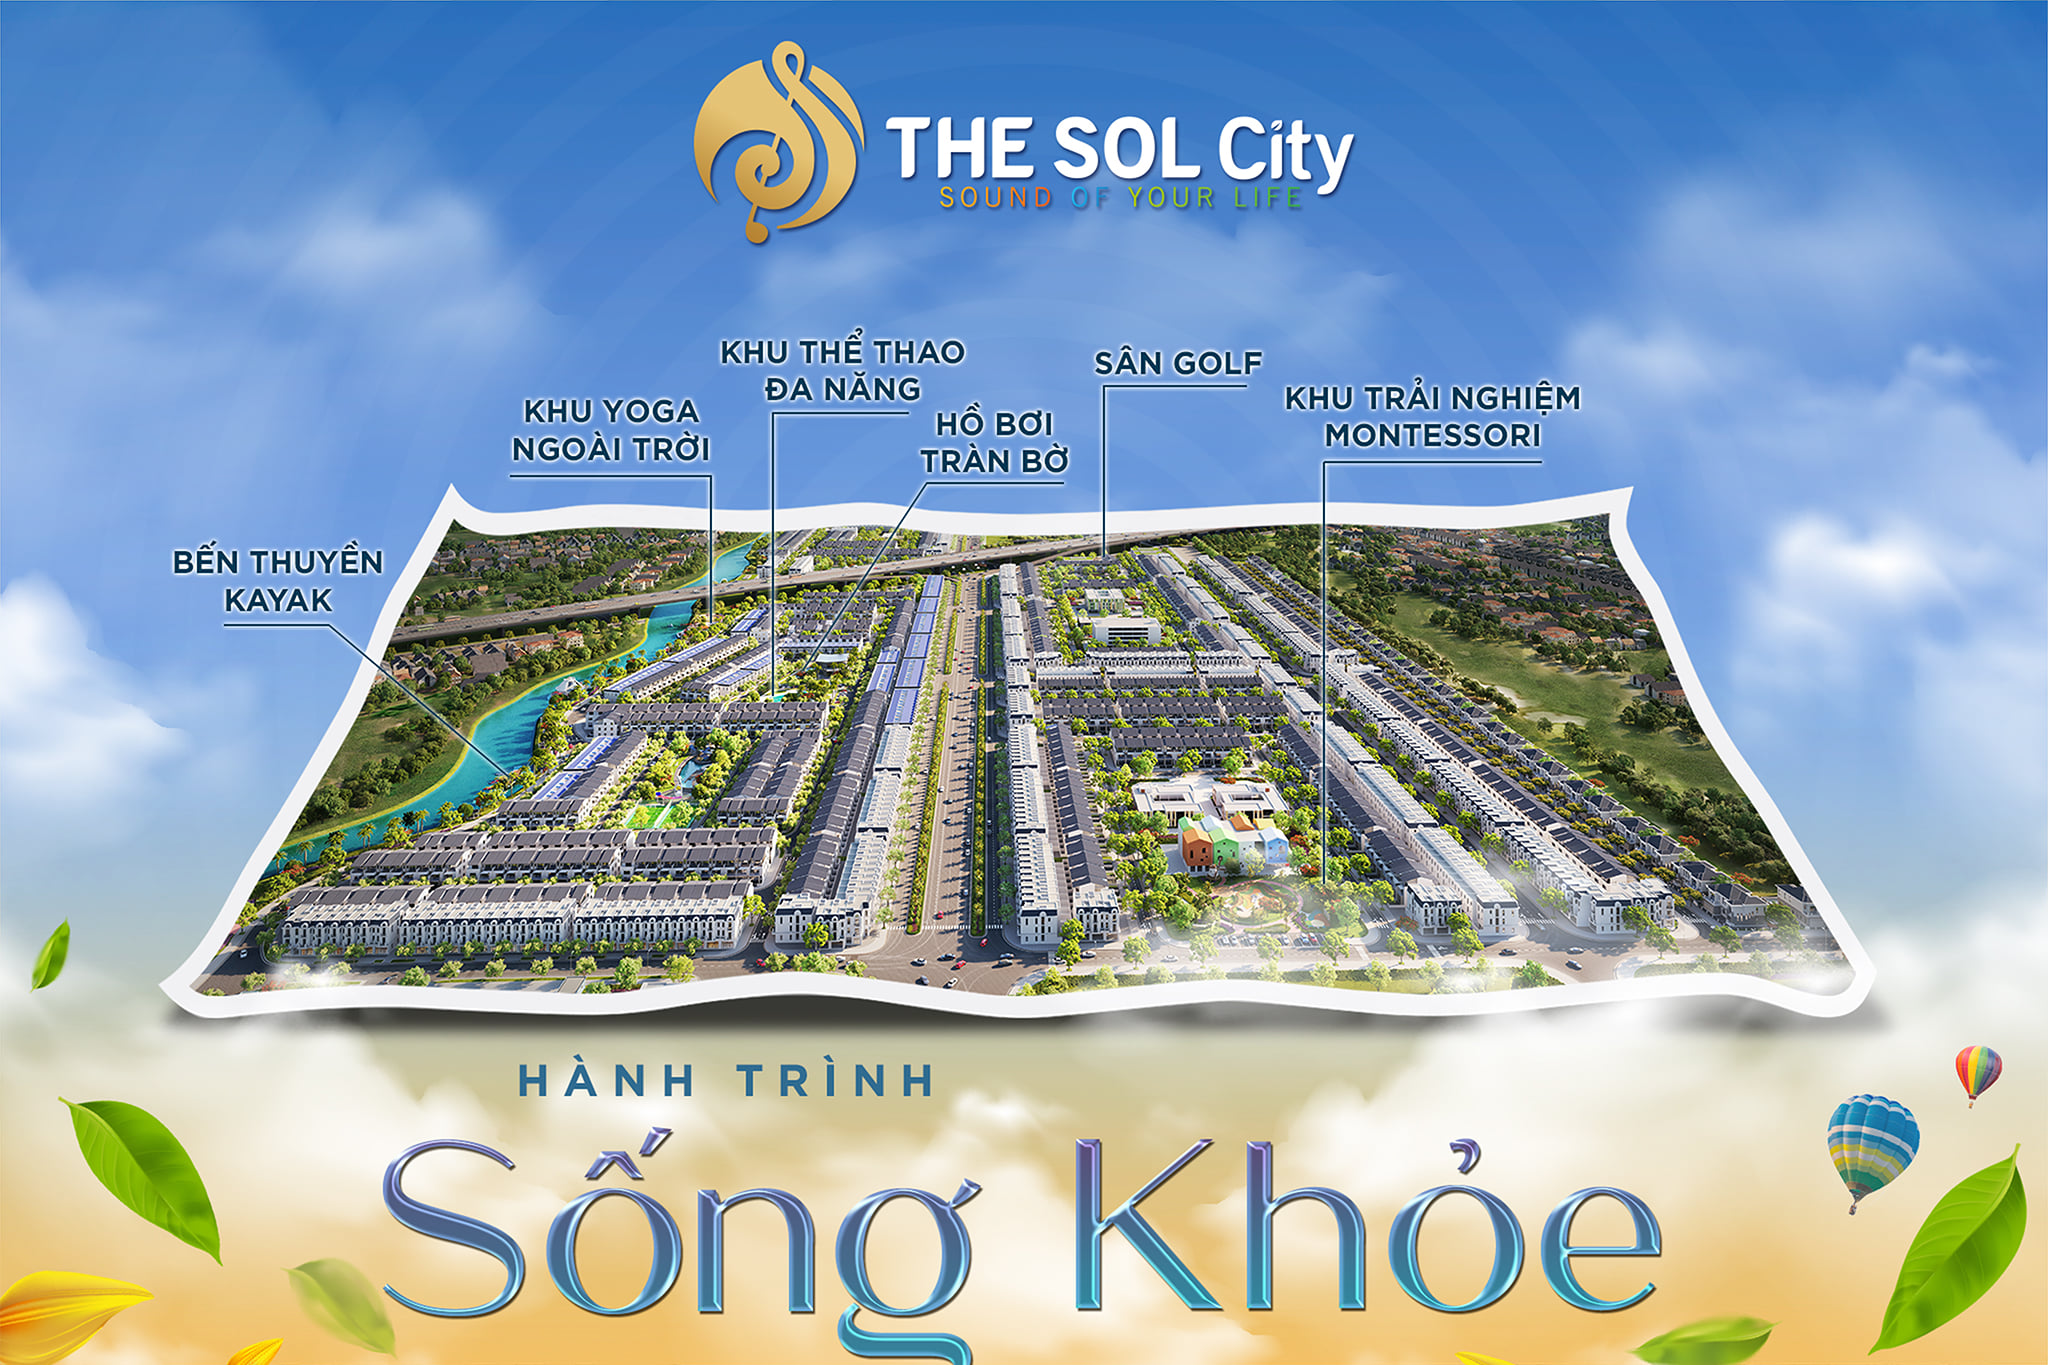 the sol city